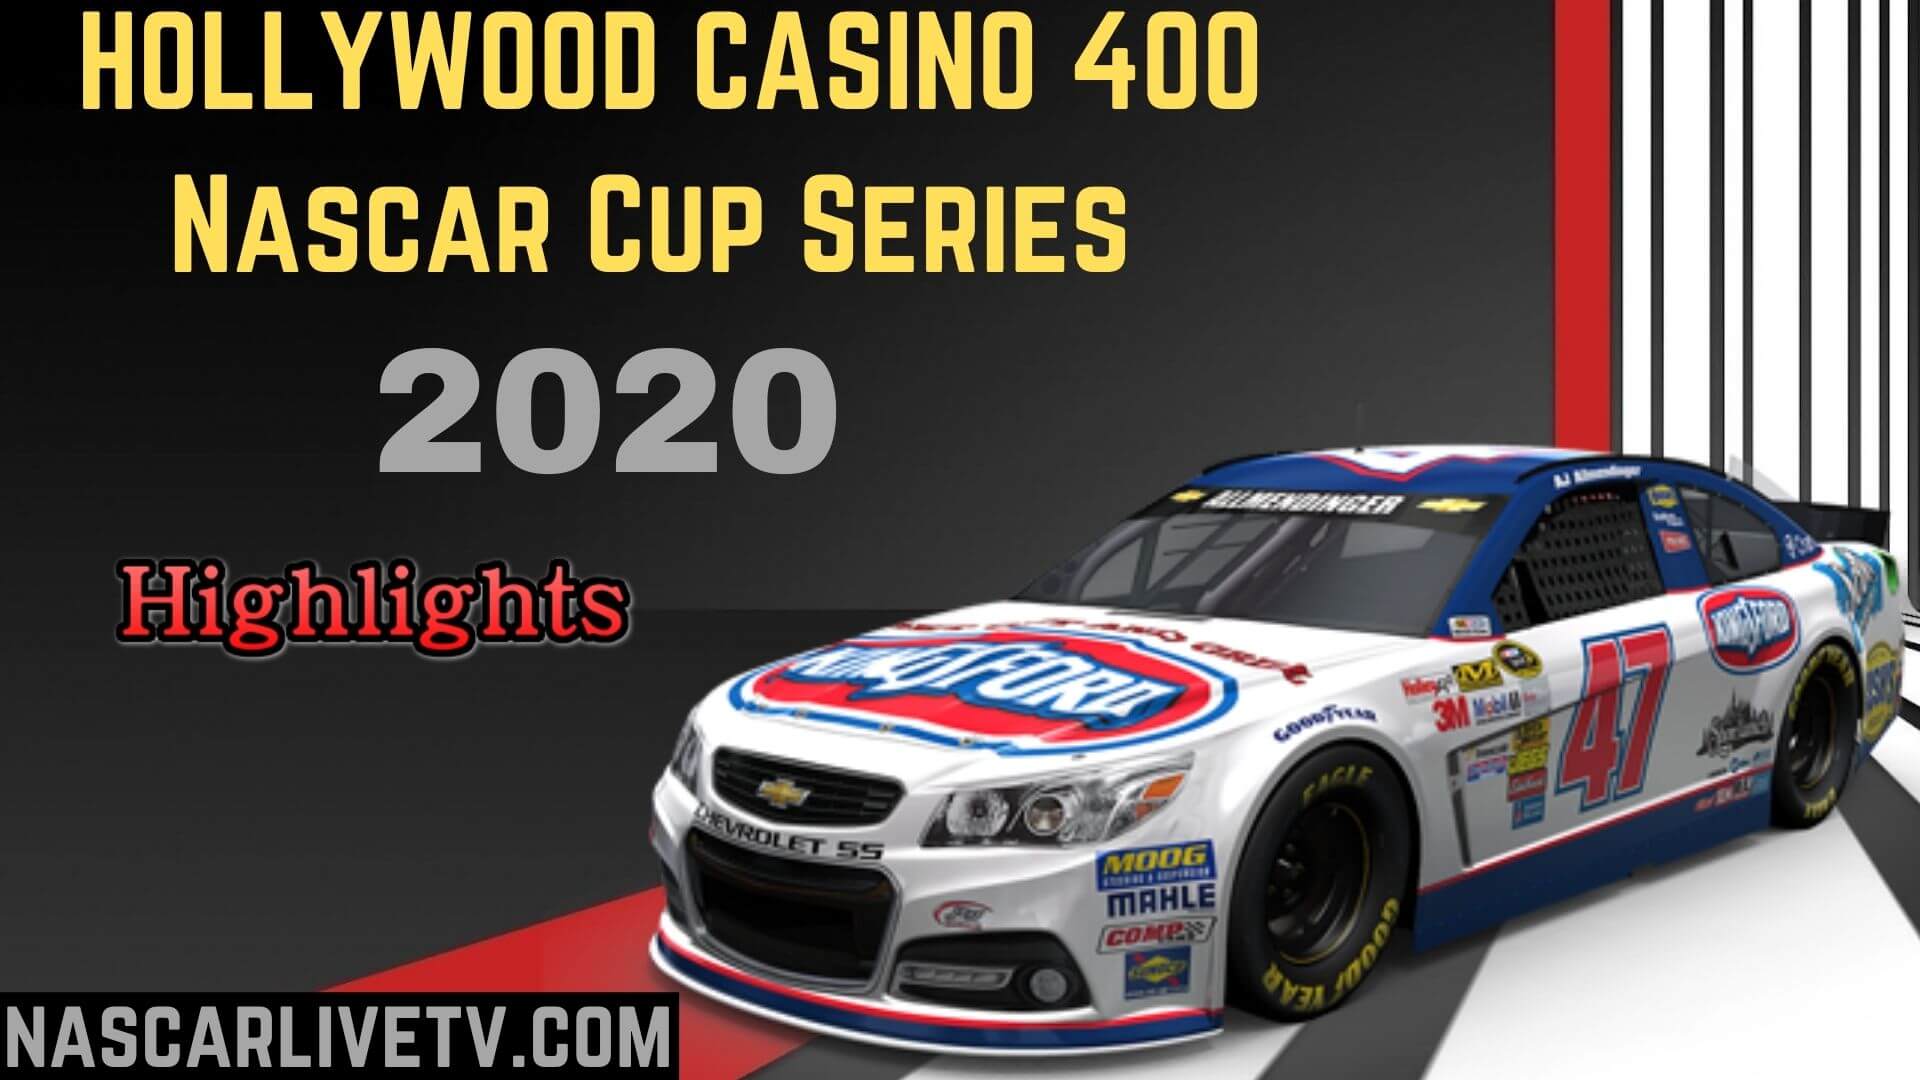 Hollywood Casino 400 Nascar Cup Series 2020 Highlights